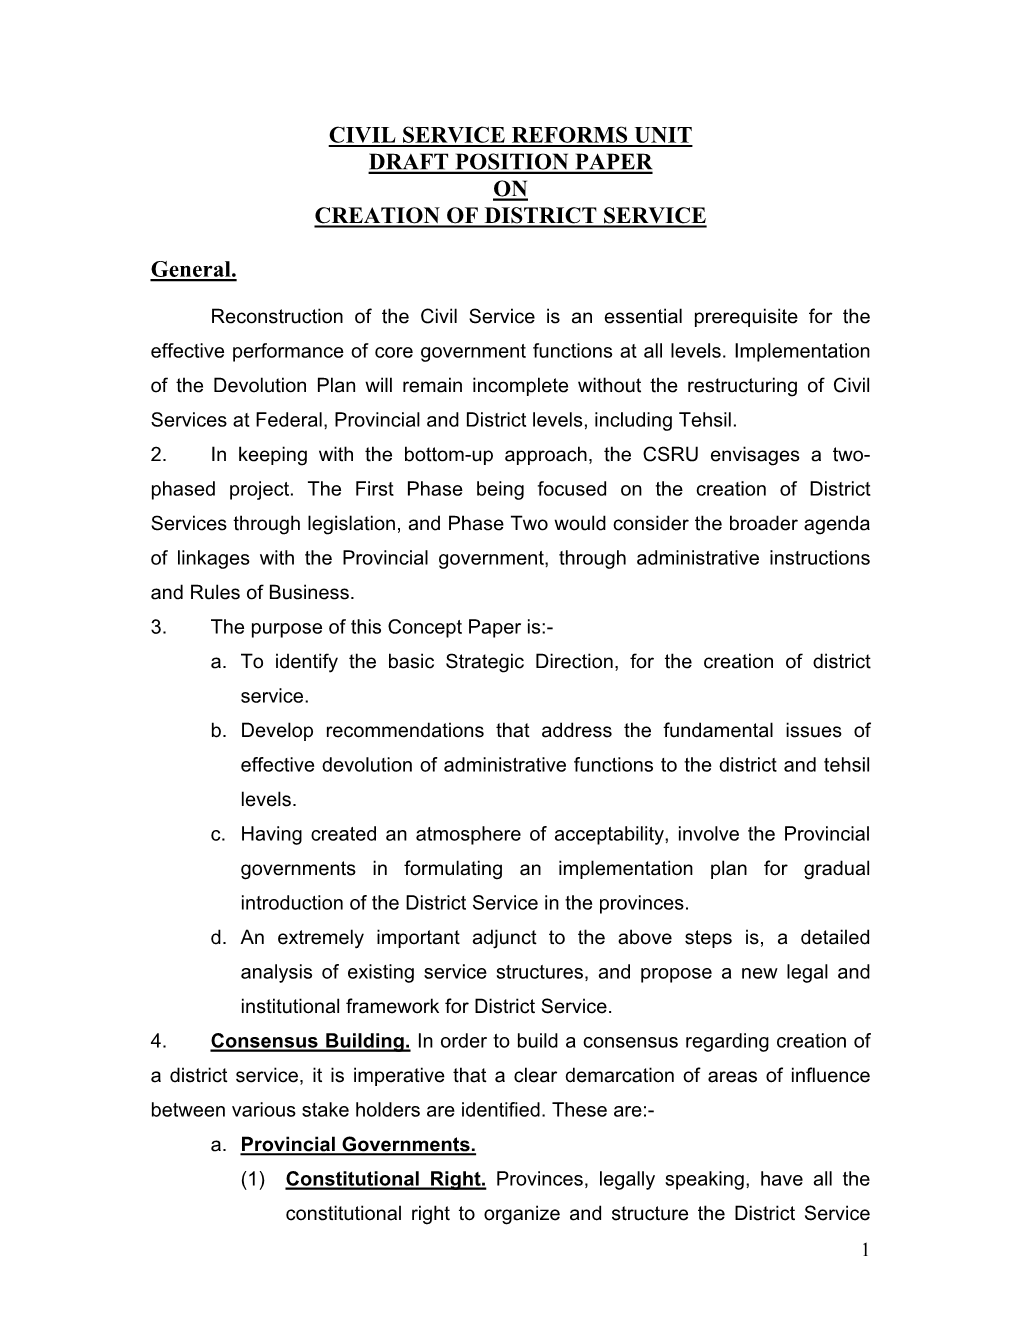 Civil Service Reforms Unit Draft Position Paper on Creation of District Service